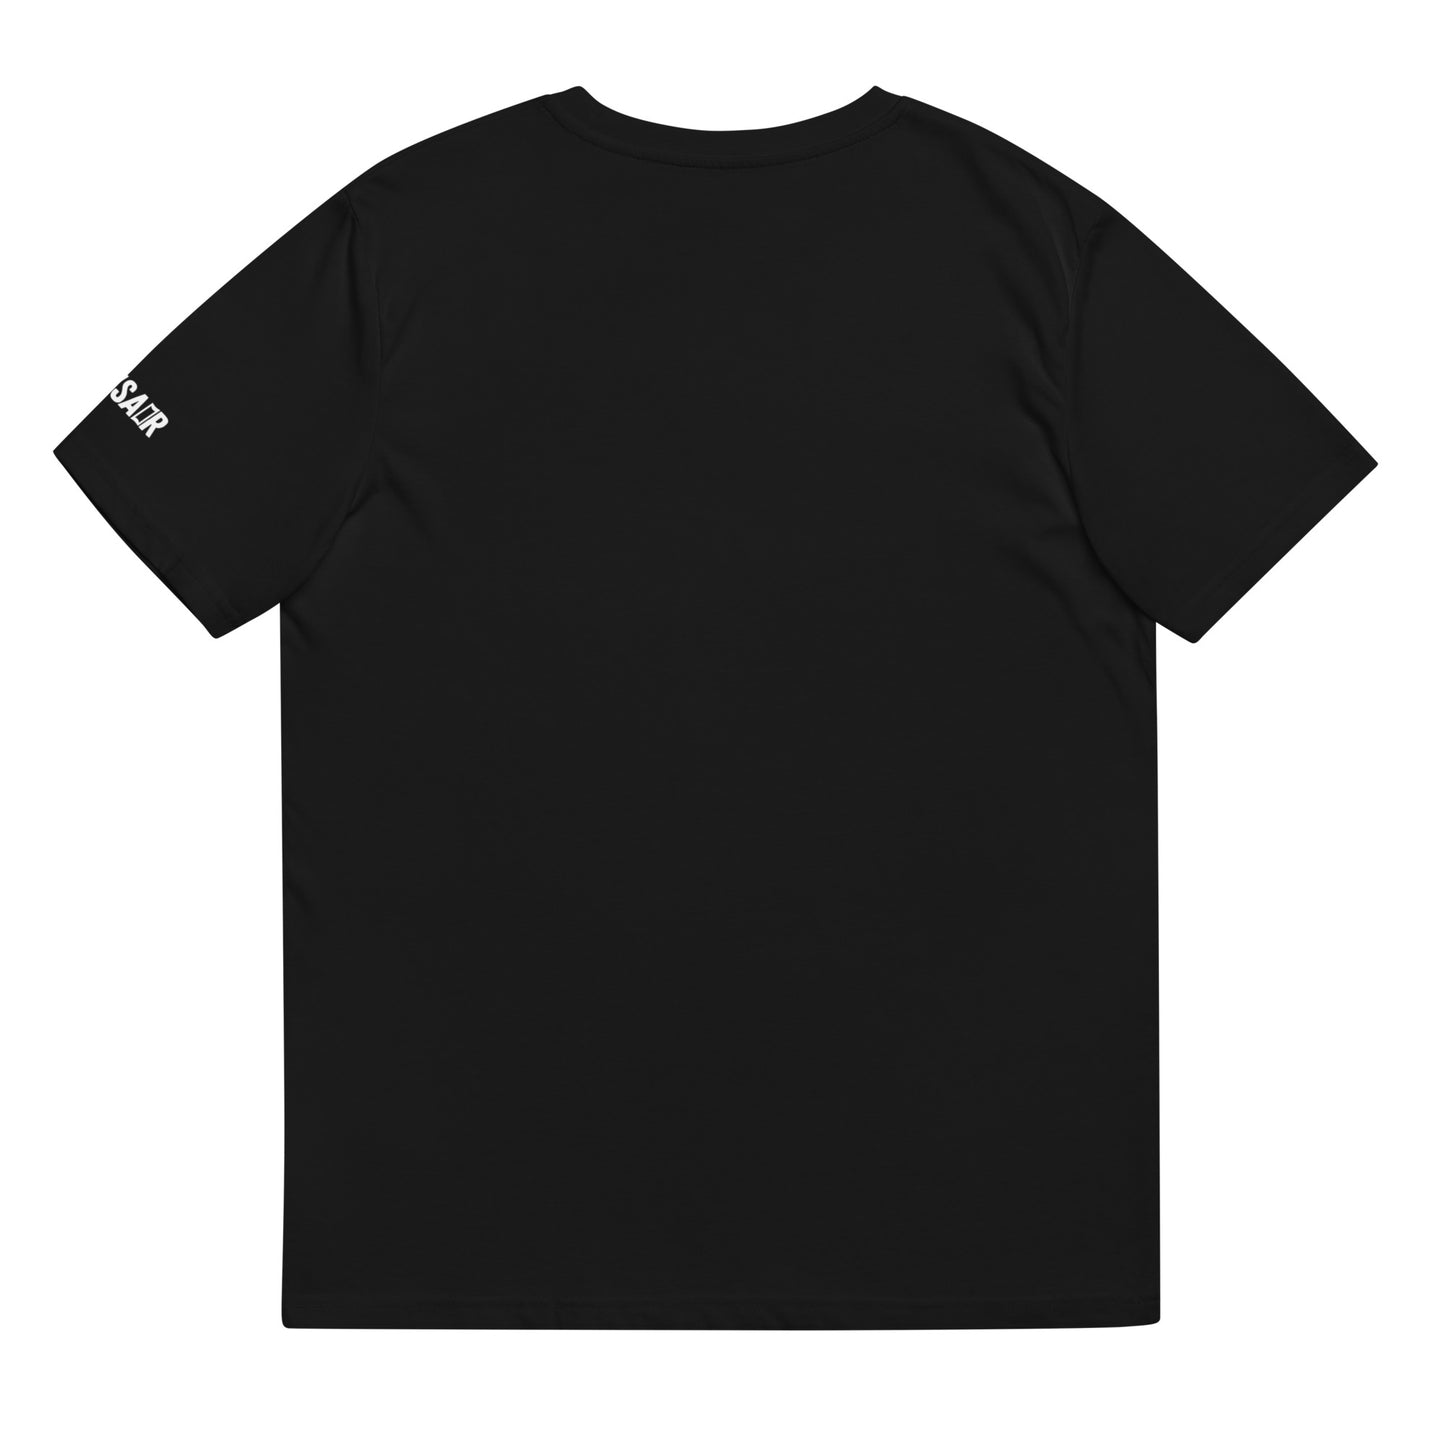 Definition of Snus T-Shirt